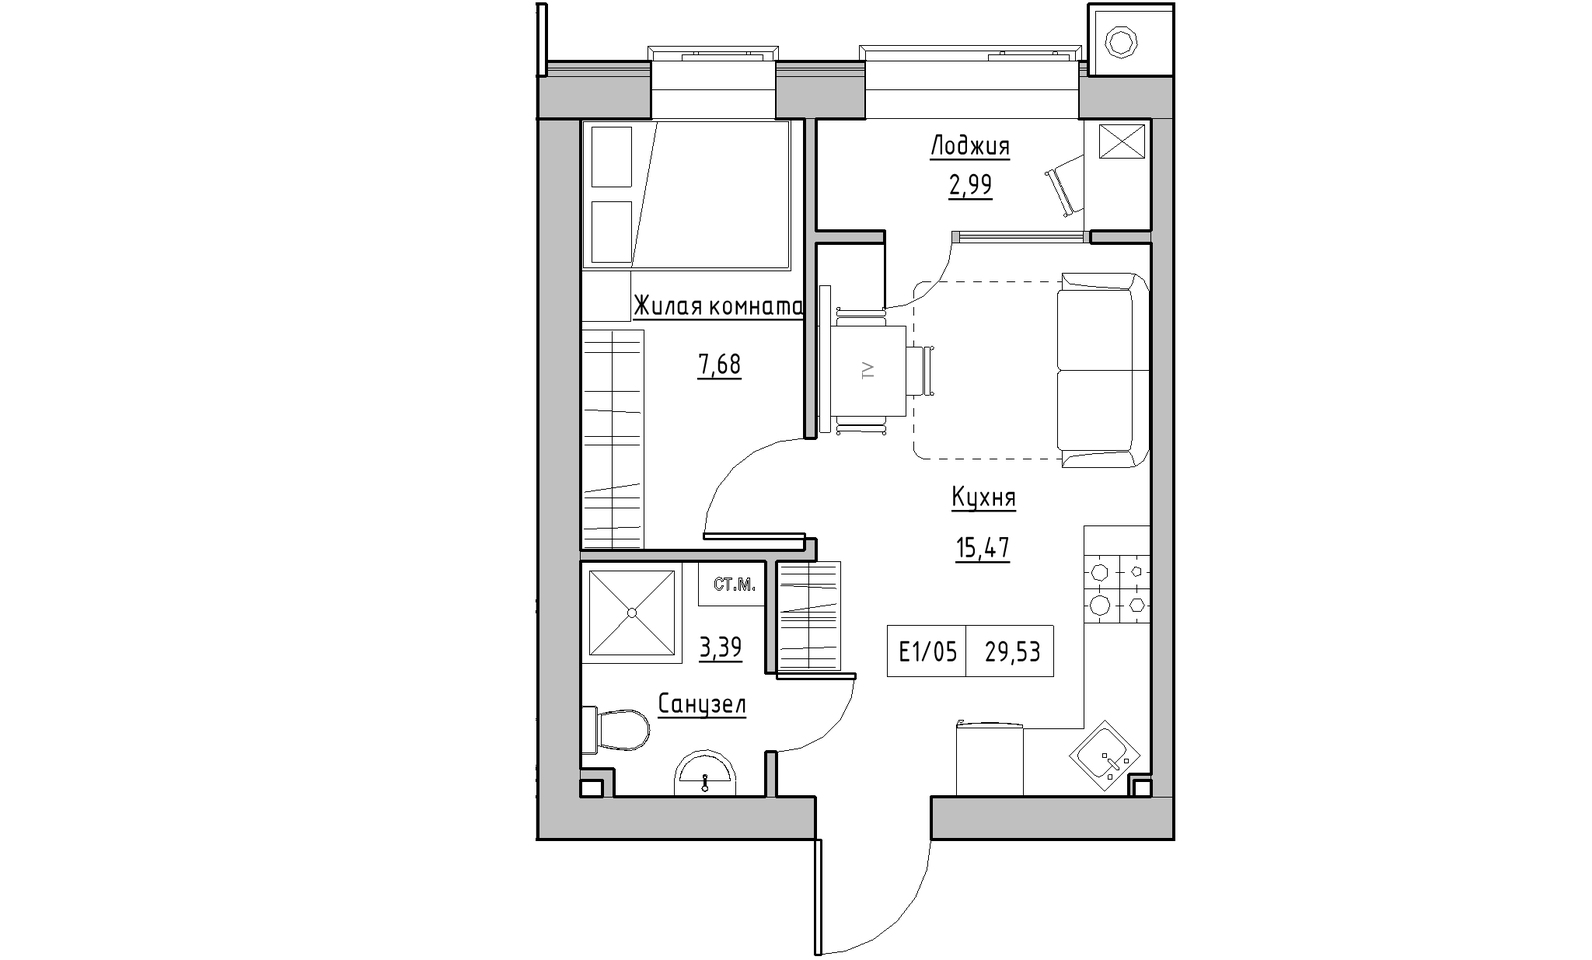 Planning 1-rm flats area 29.53m2, KS-014-03/0006.